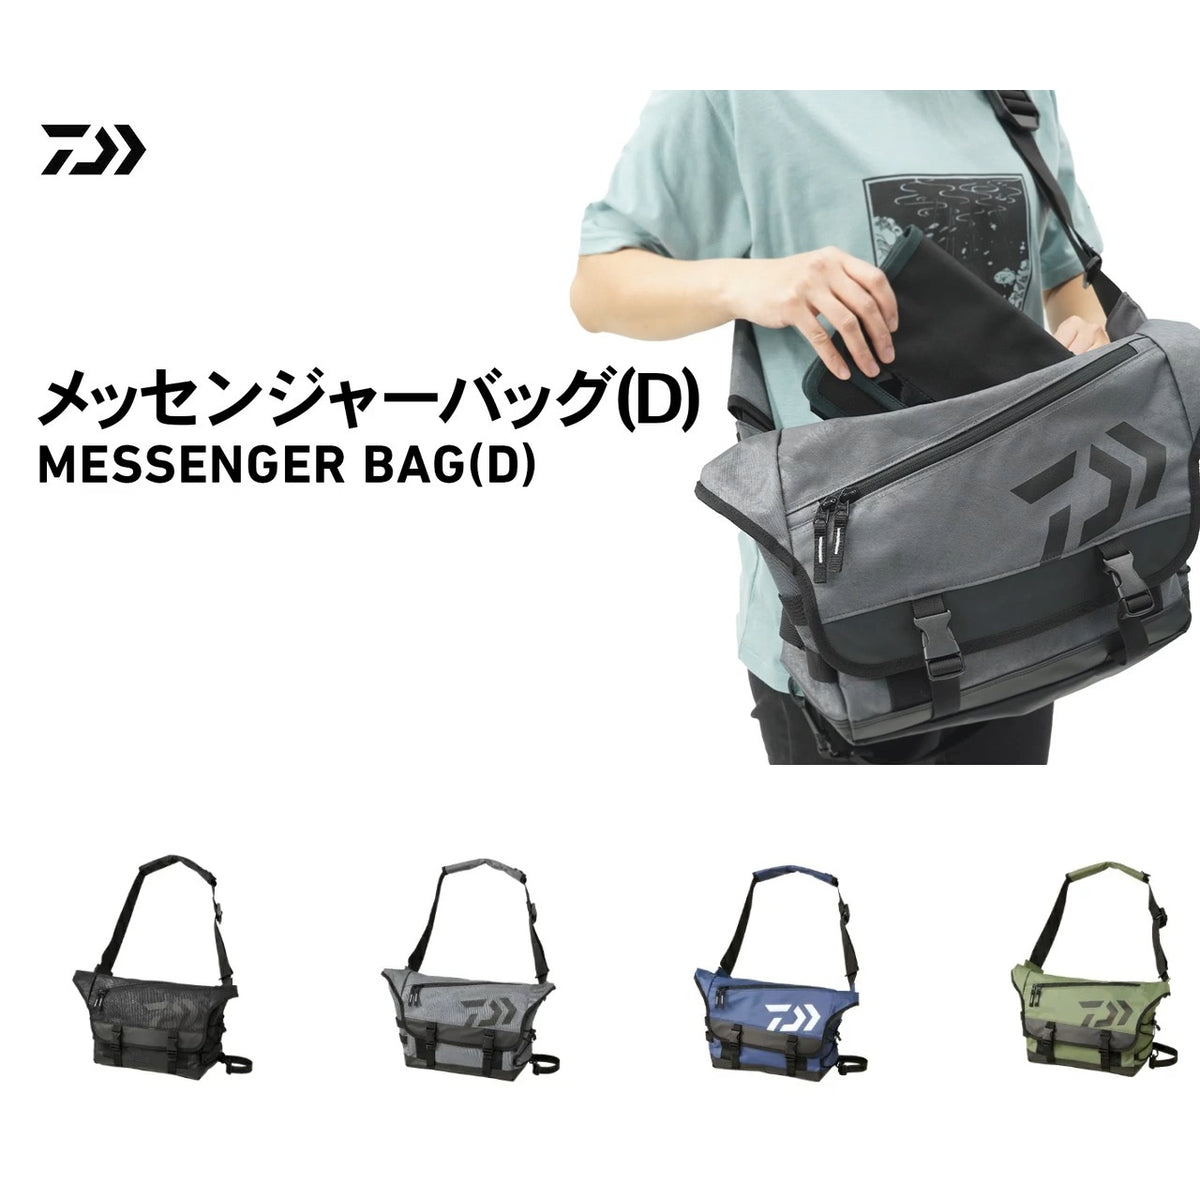 DAIWA Messenger bag (D)